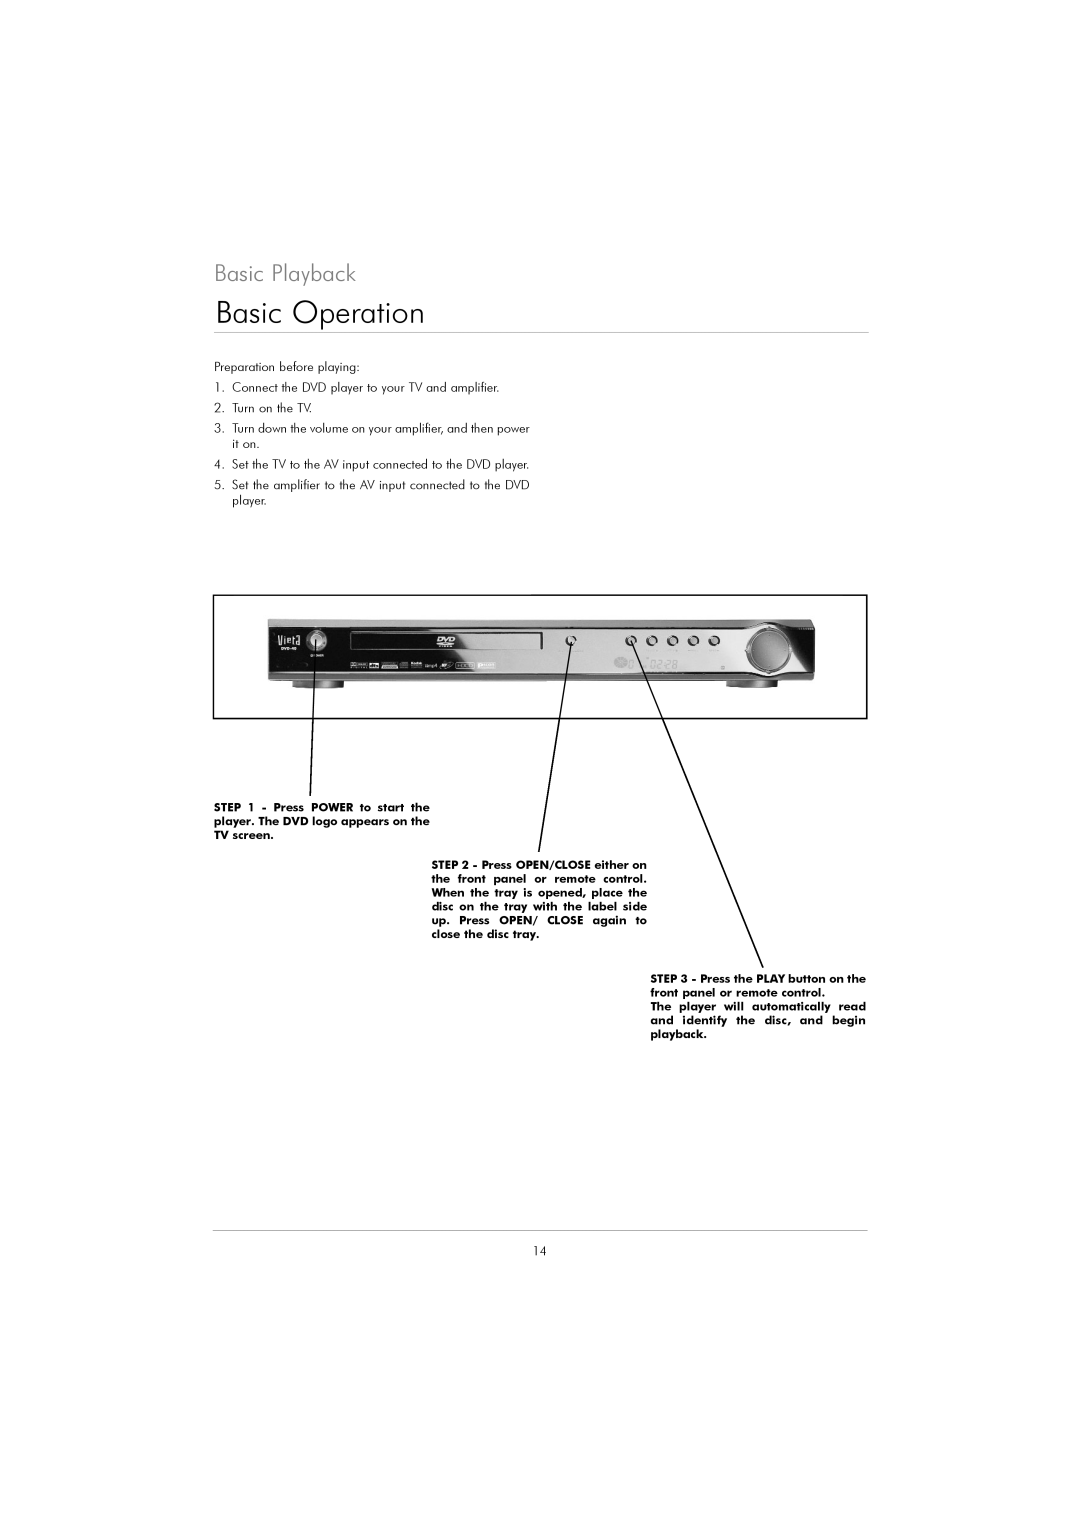 Kodak DVD 40 user manual Basic Operation, Basic Playback 